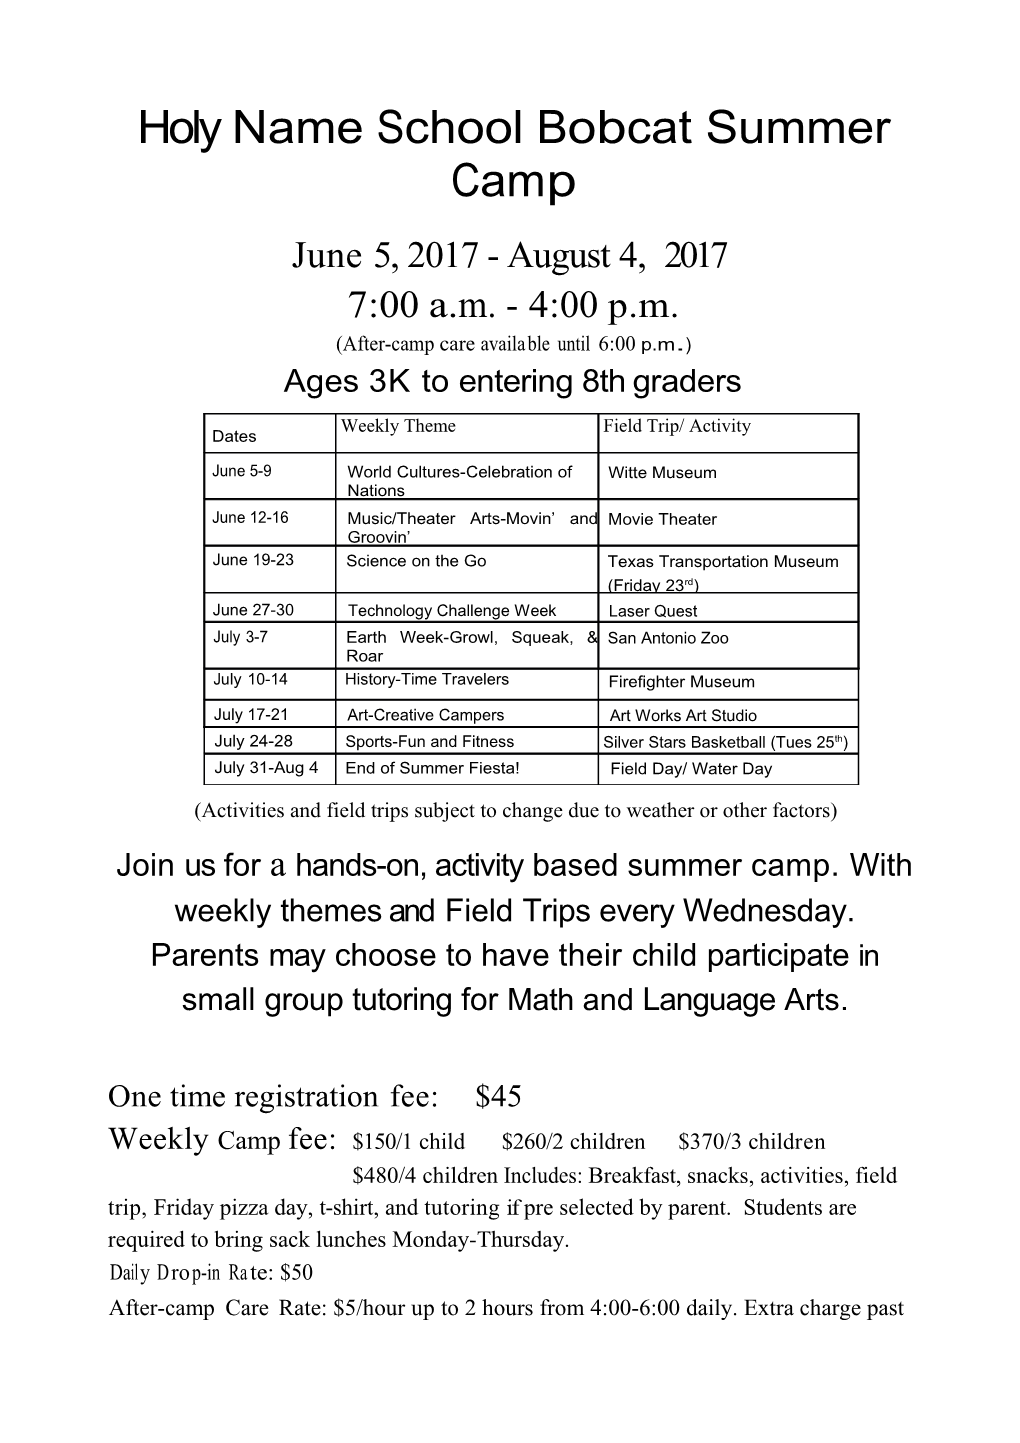 Holy Name School Bobcat Summer Camp